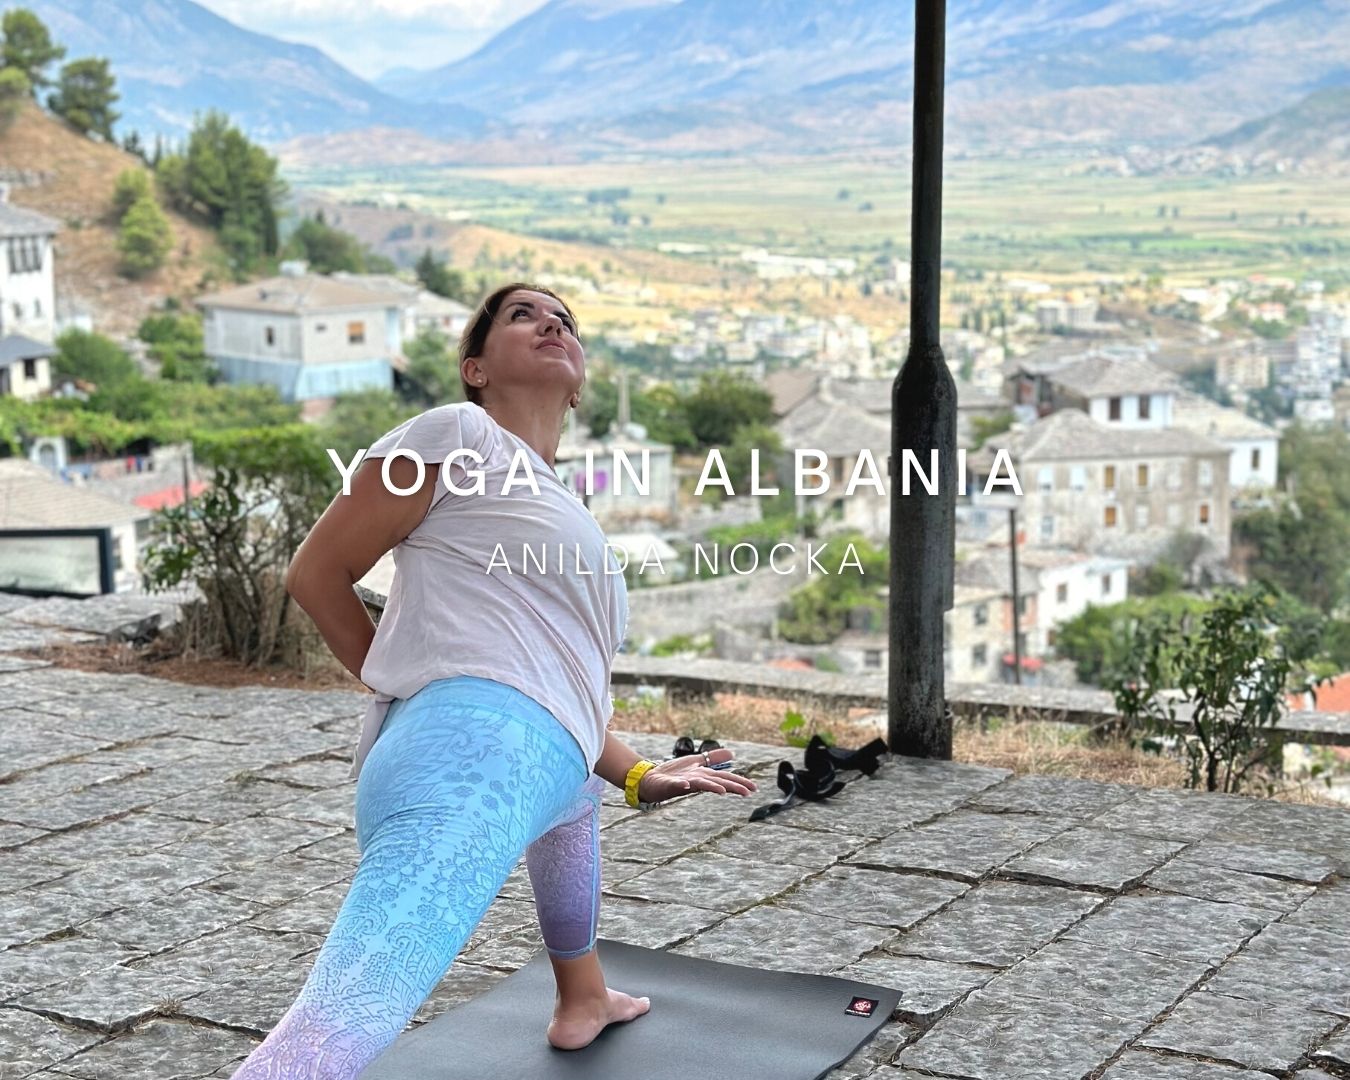 #101 – Yoga is Salvation – Yoga in Albania with Anilda Nocka